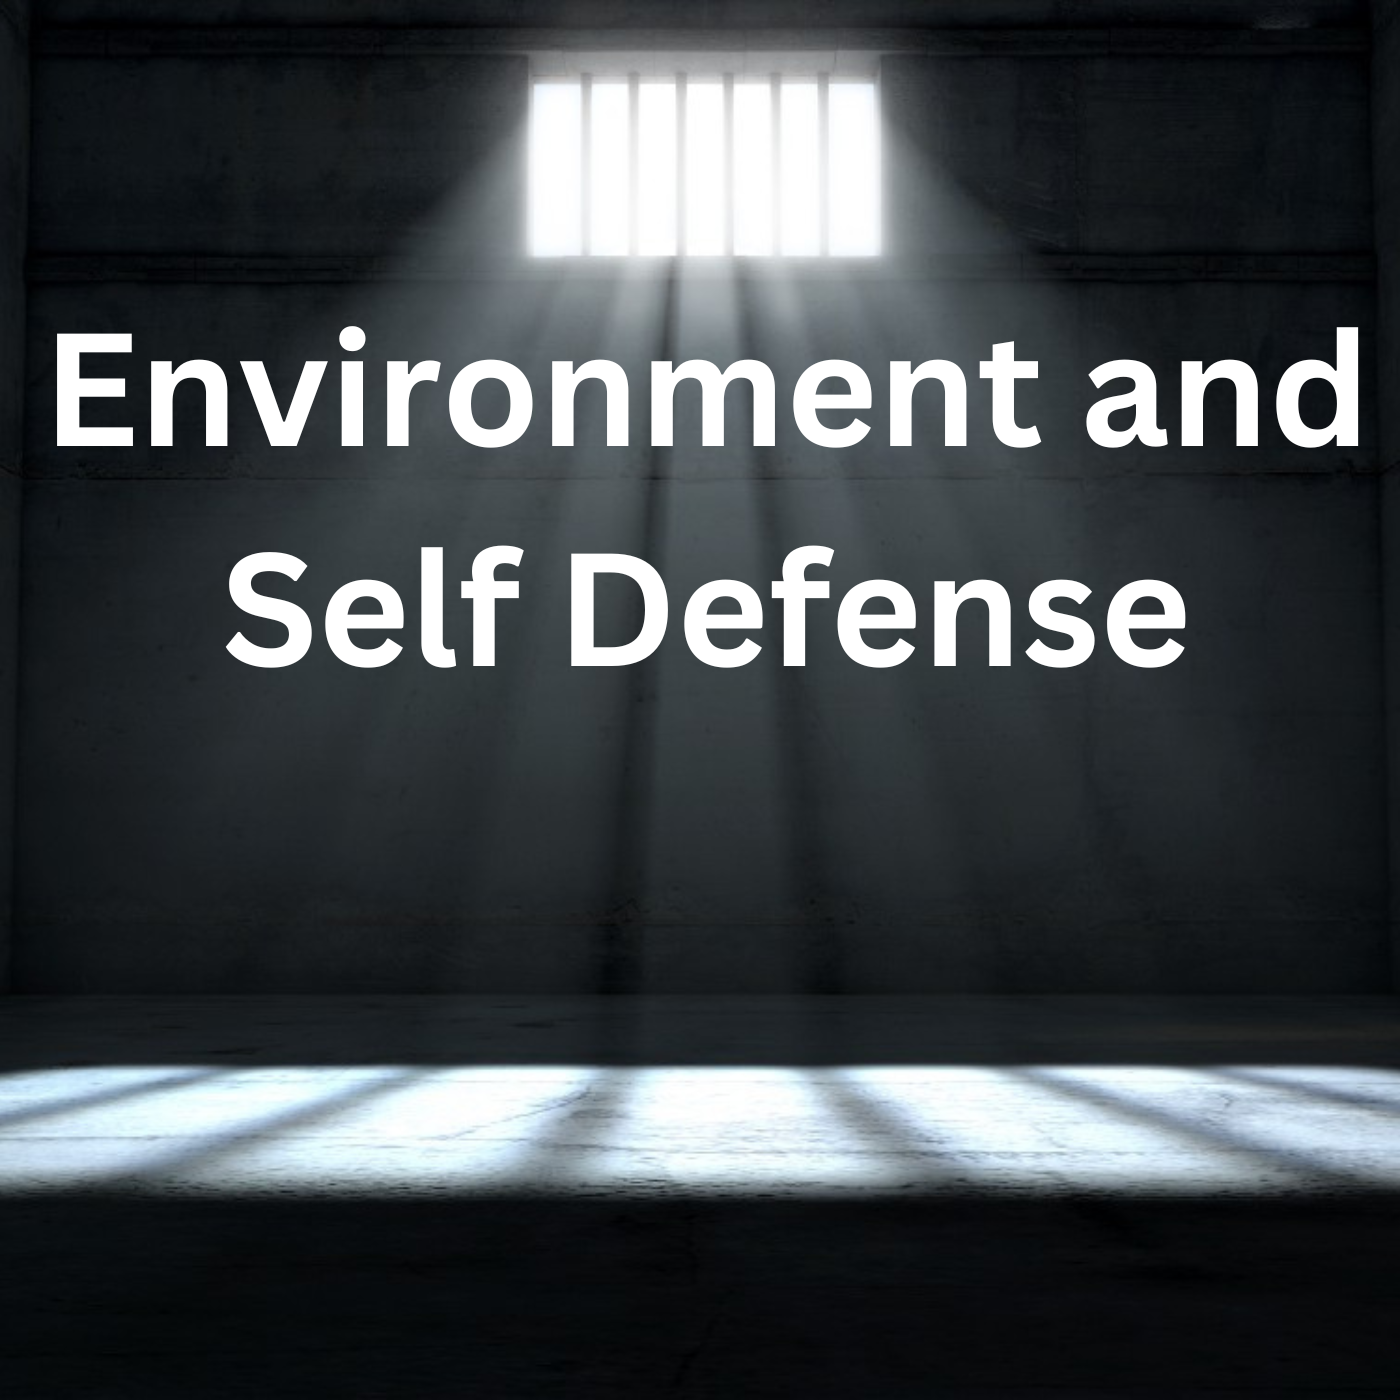 * Environment and Self Defense